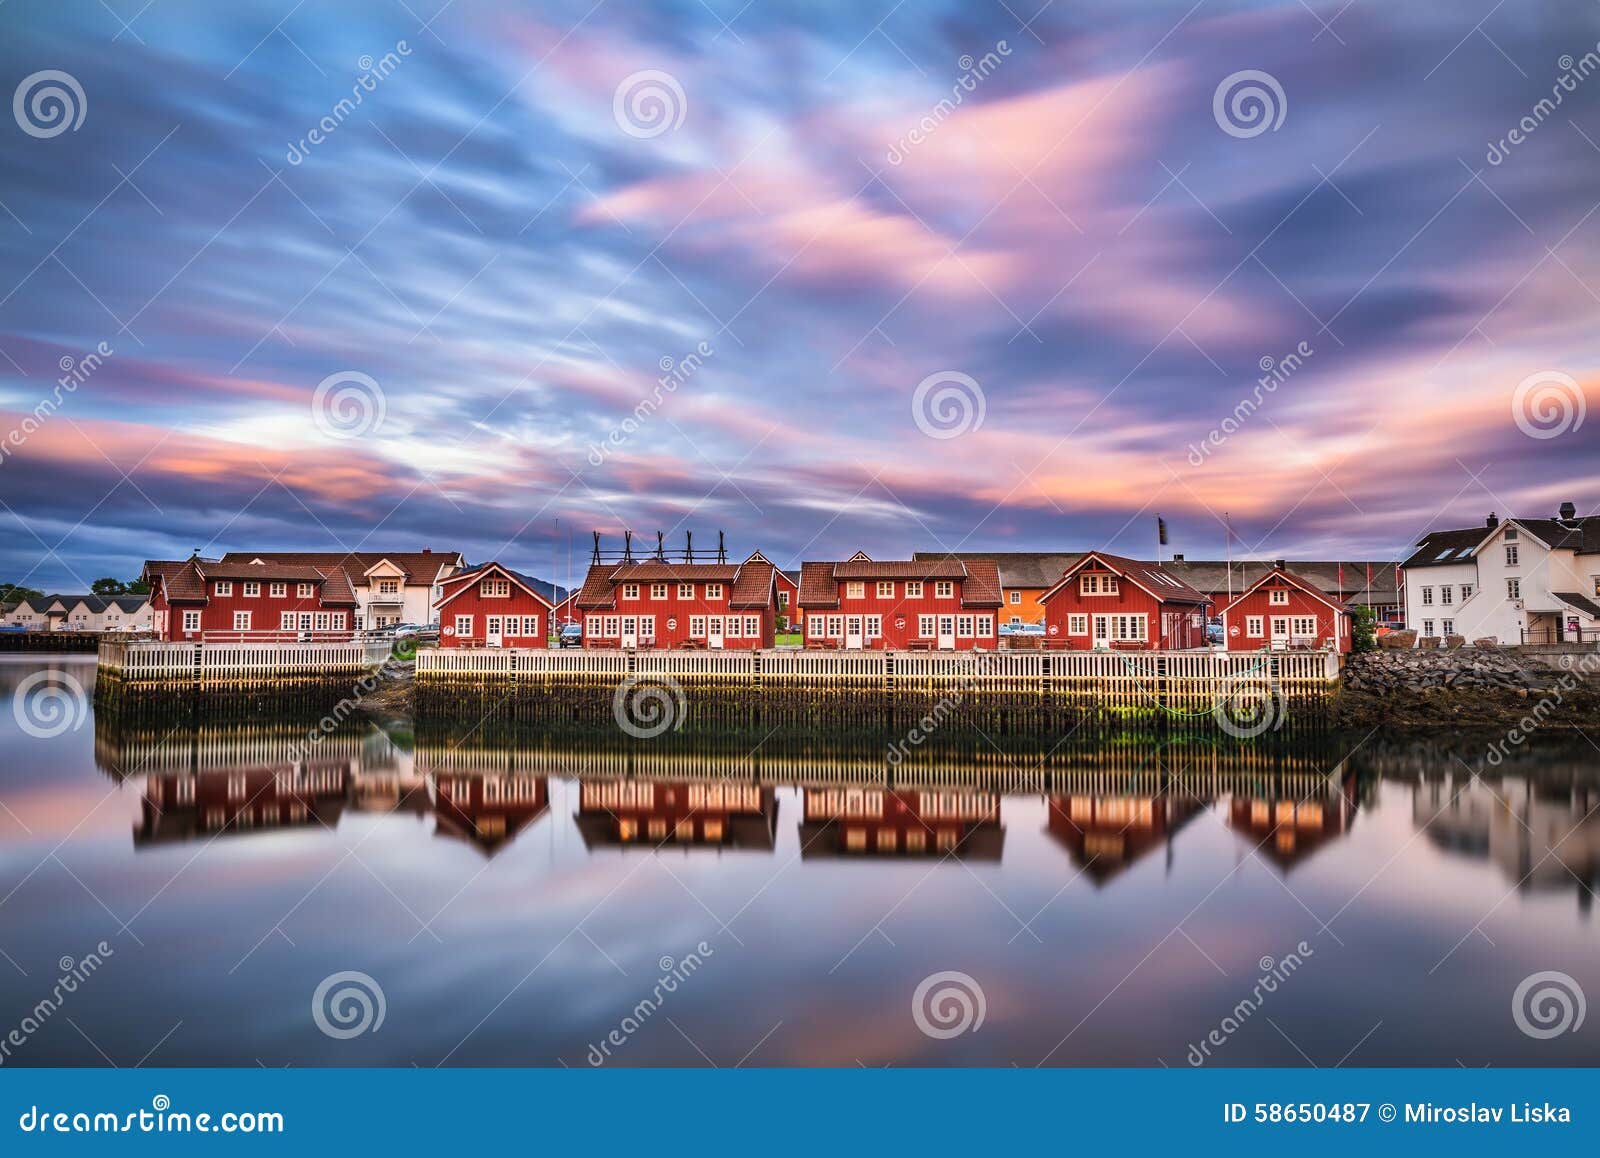 sunset over harbor houses in svolvaer, lofoten islands, norway